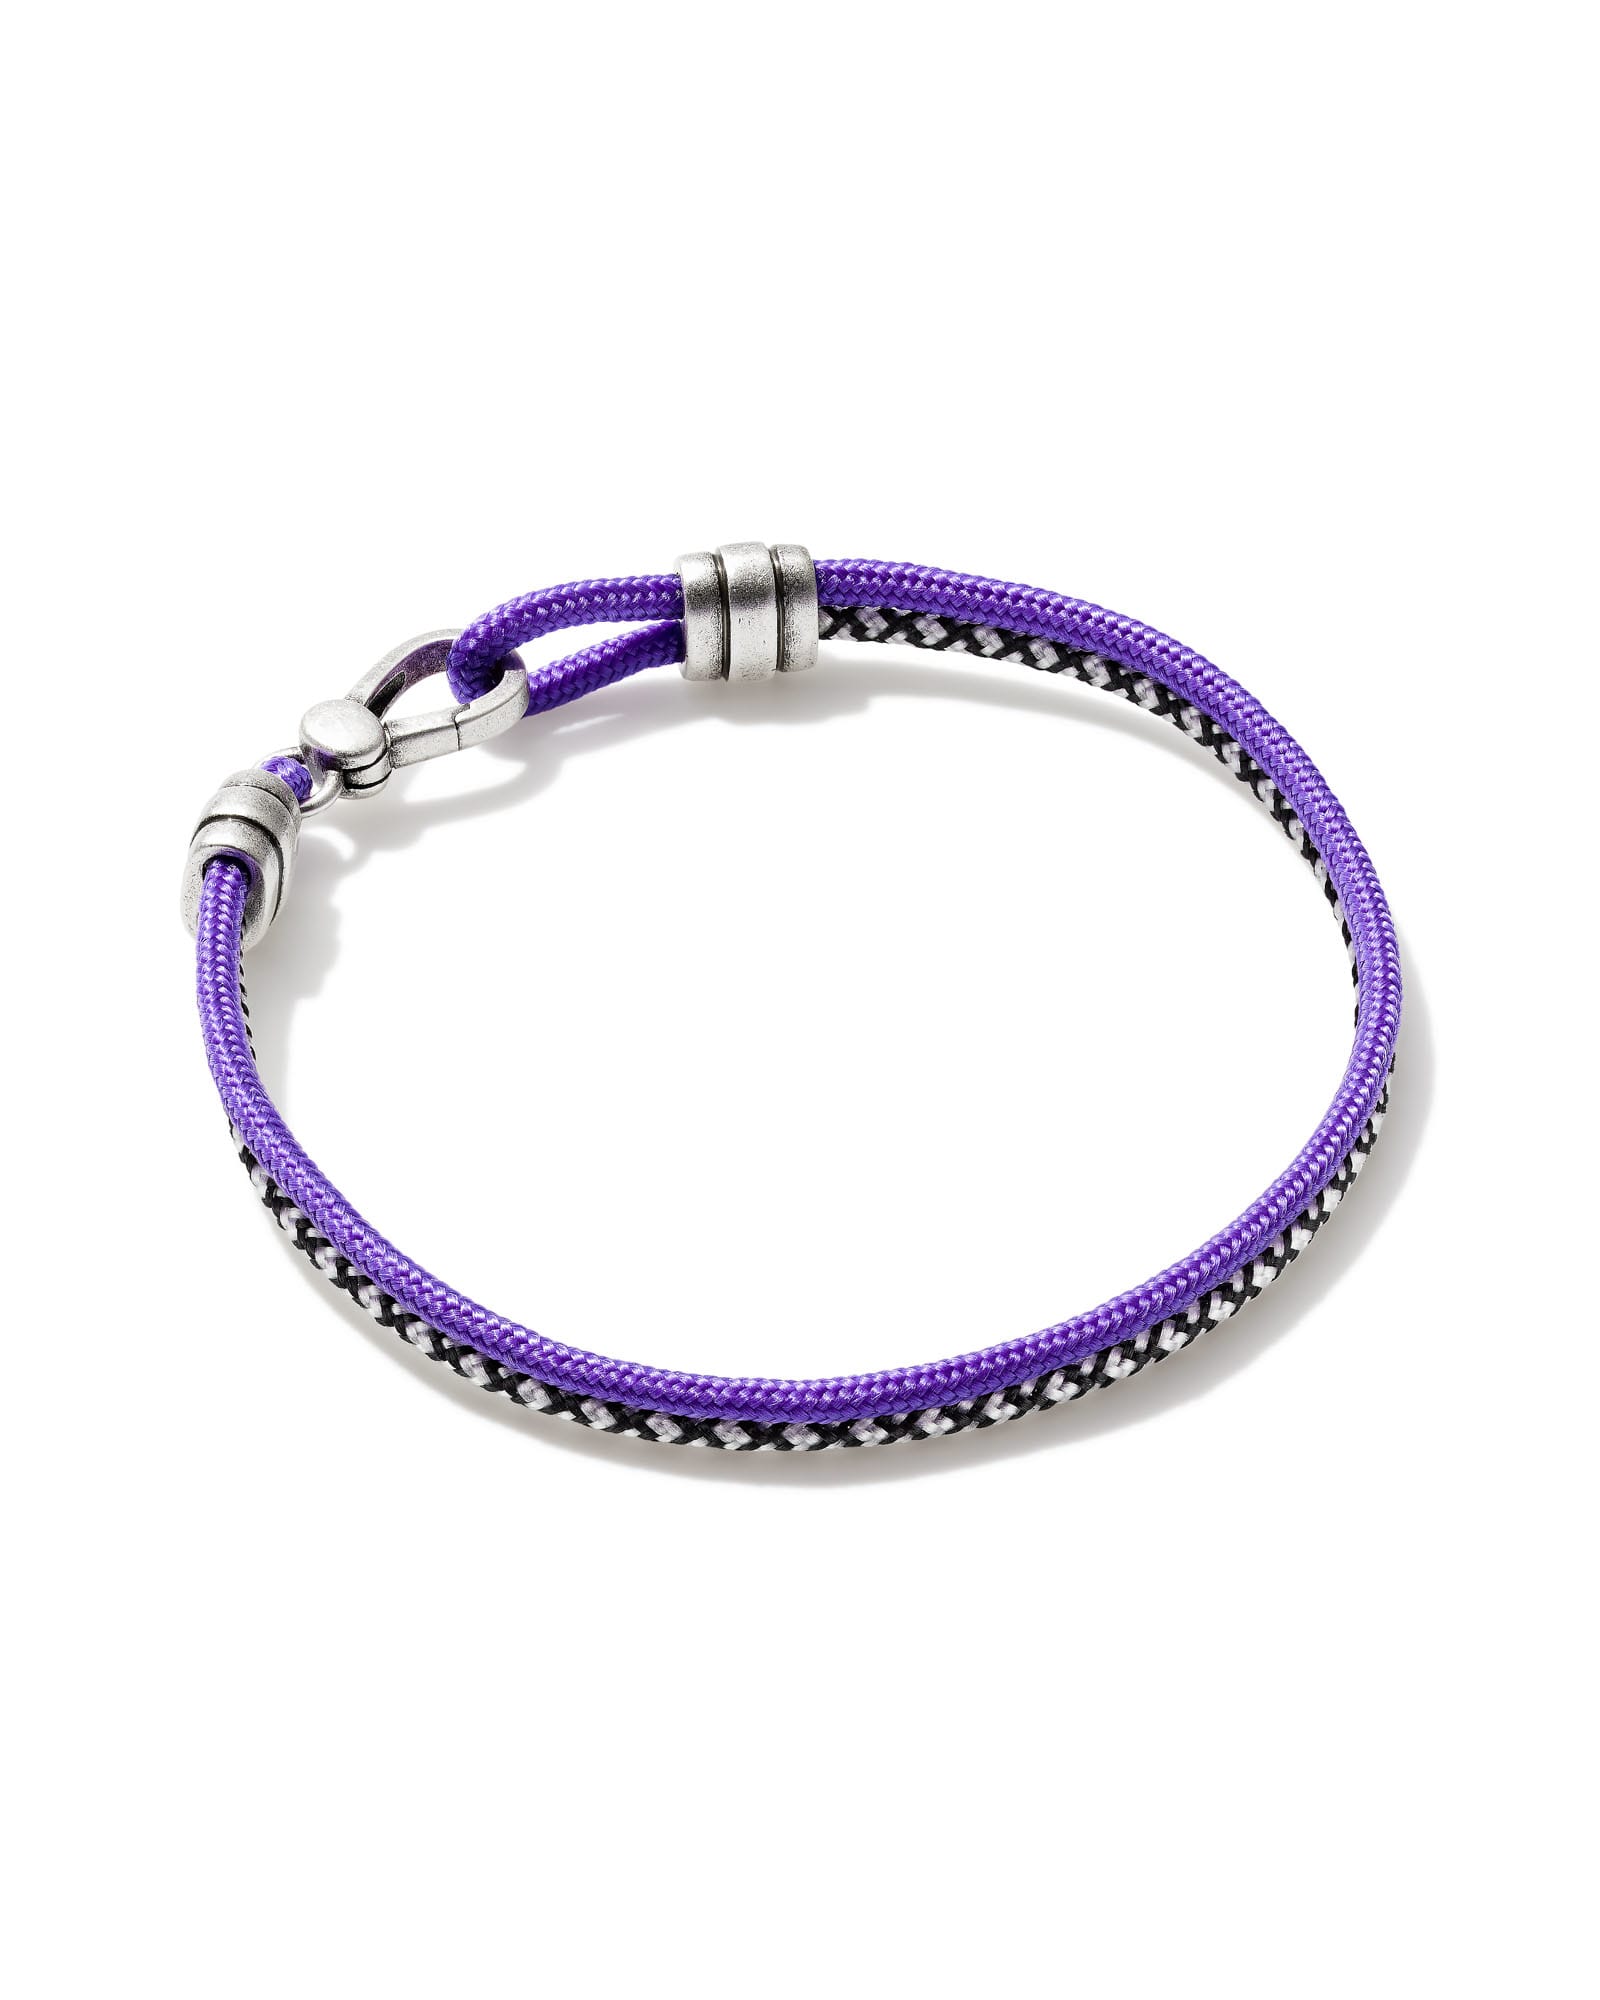 Kendra Scott Men's Kenneth Oxidized Sterling Silver Corded Bracelet in Purple Mix | Paracord